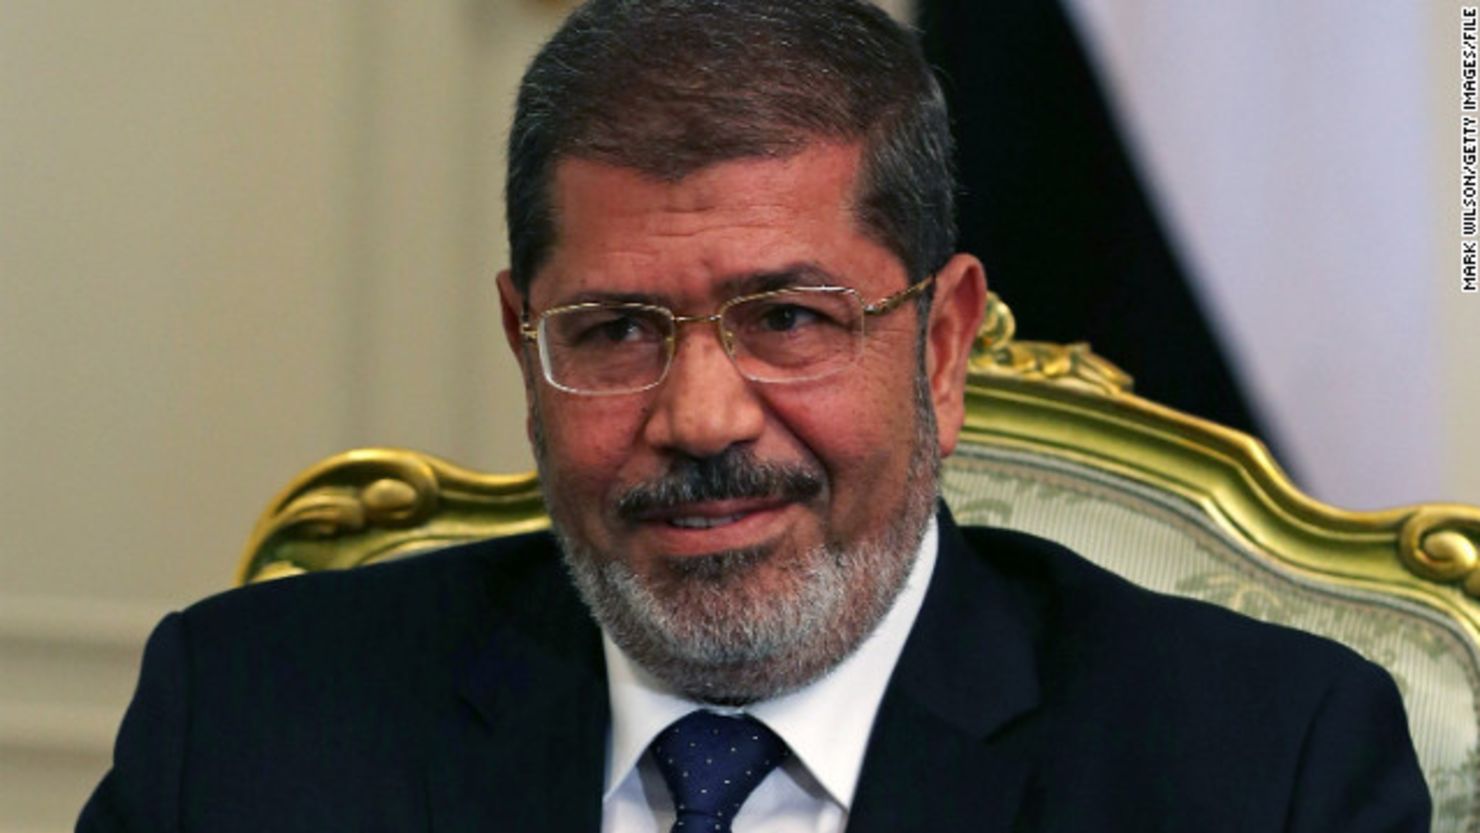 El presidente egipcio Mohamed Morsi, desafió al Ejército al llamar a labores al parlamento cuando asumió el poder el 30 de junio.